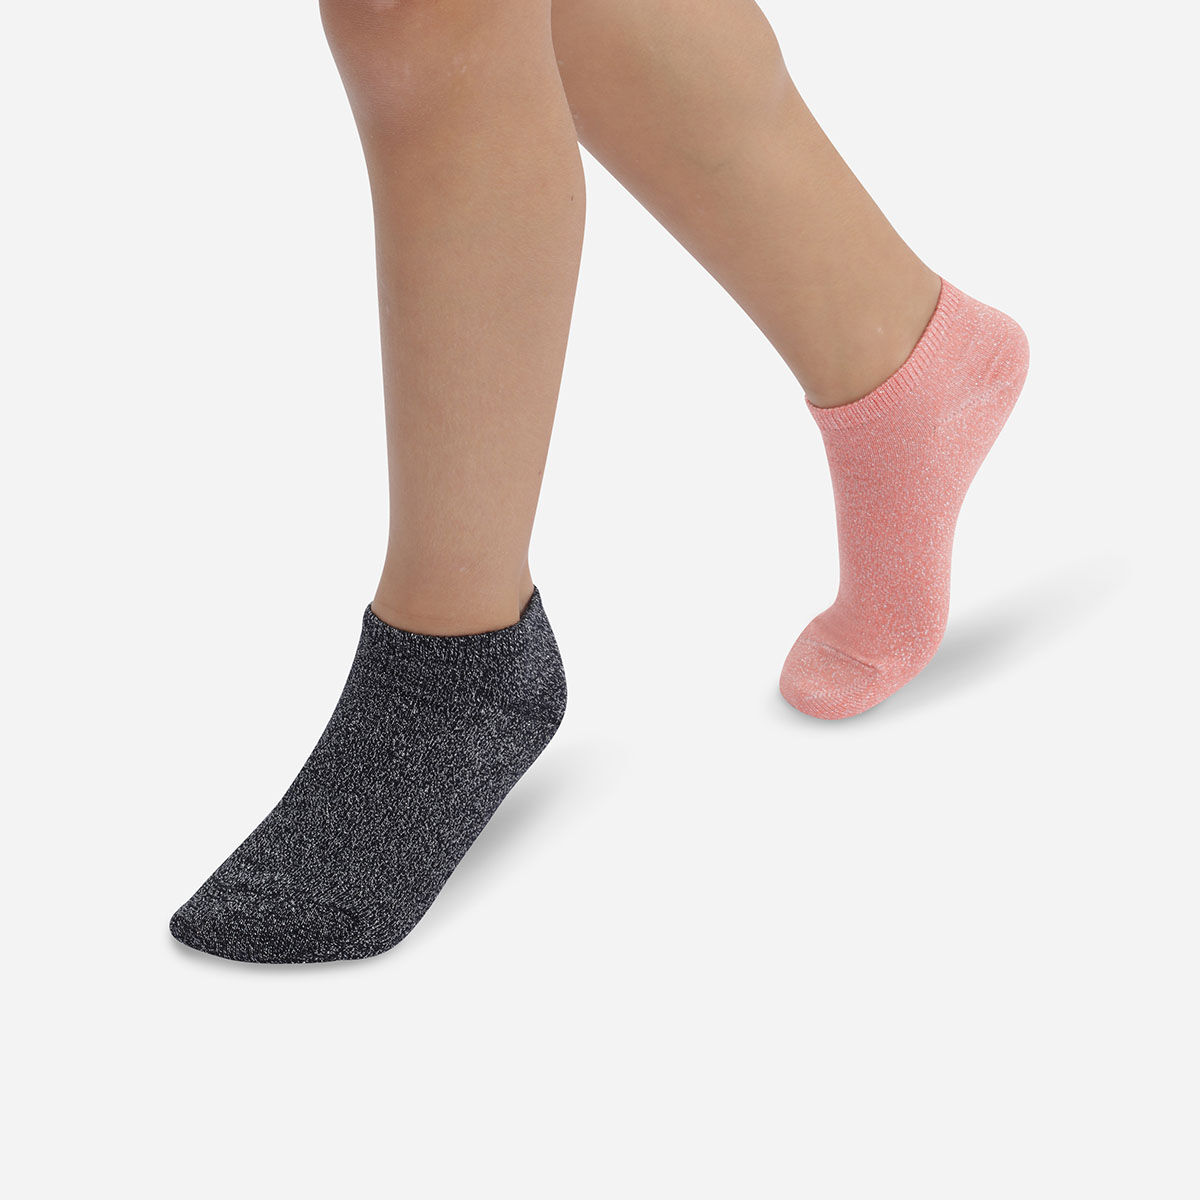 DIM chaussettes calzini indoor per bambini 